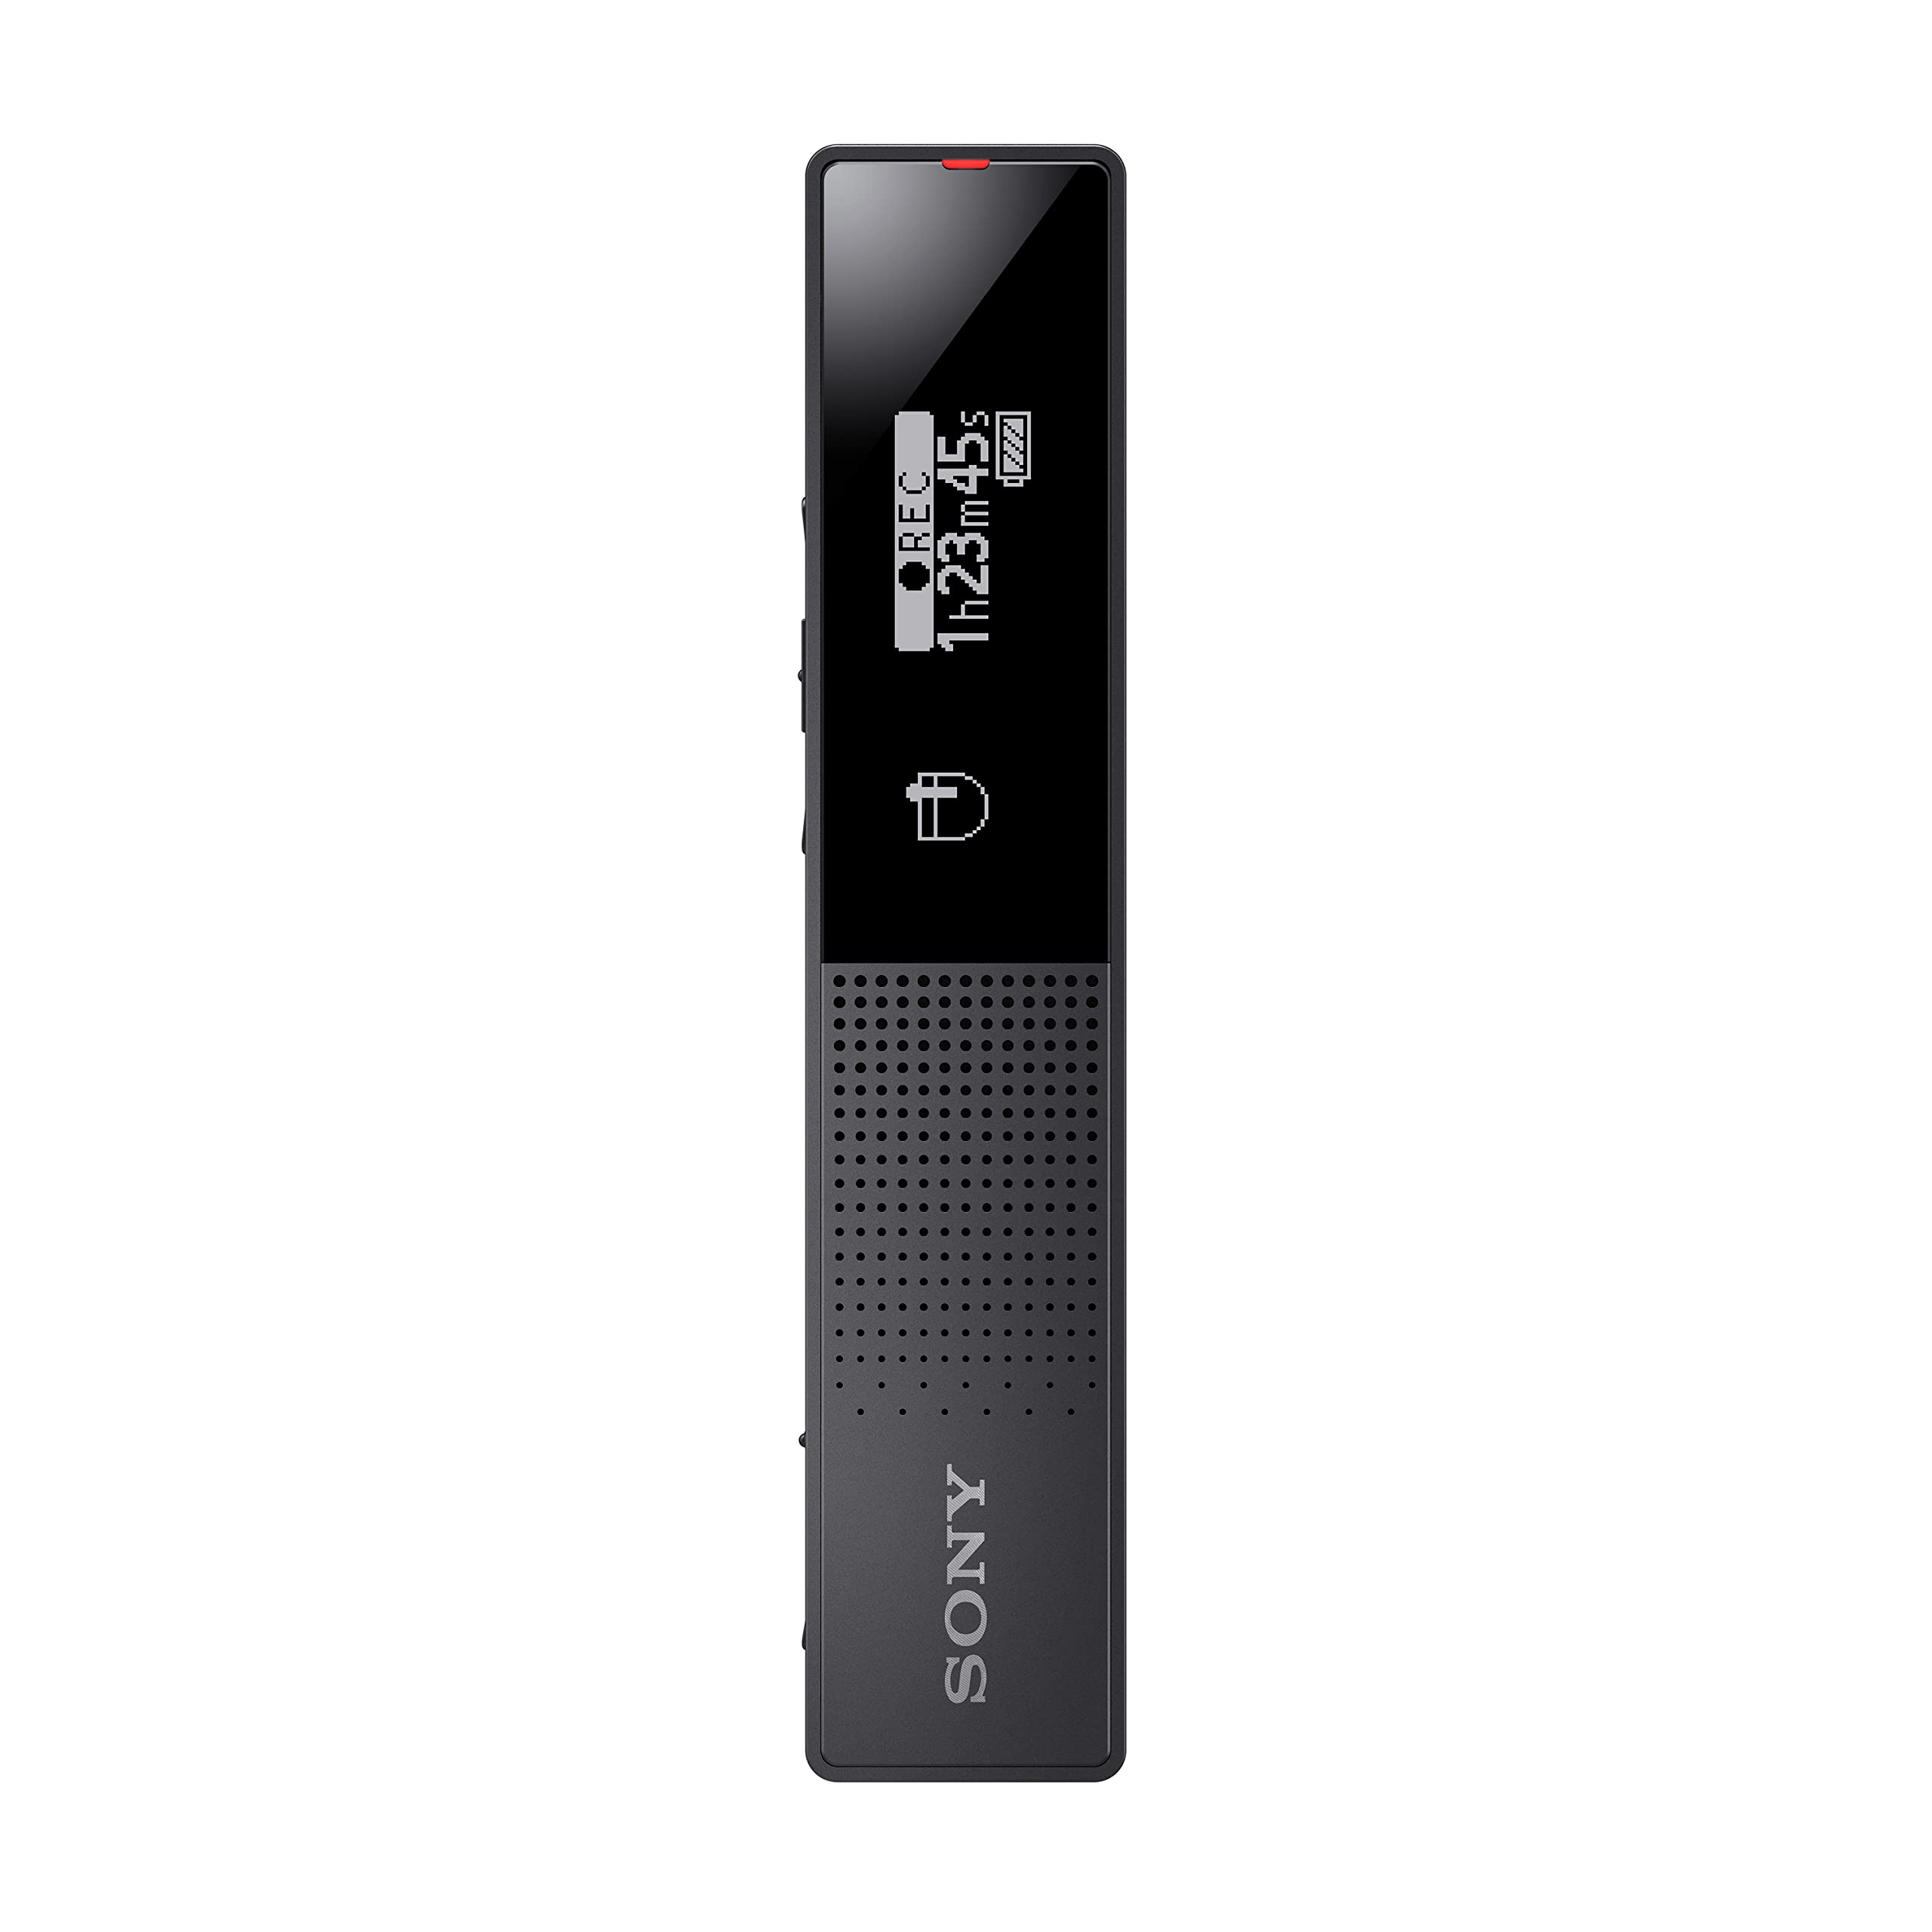 Sony ICD-TX660 - OLED 디스플레이를 탑재한 슬림형 디지털 음성 녹음기...